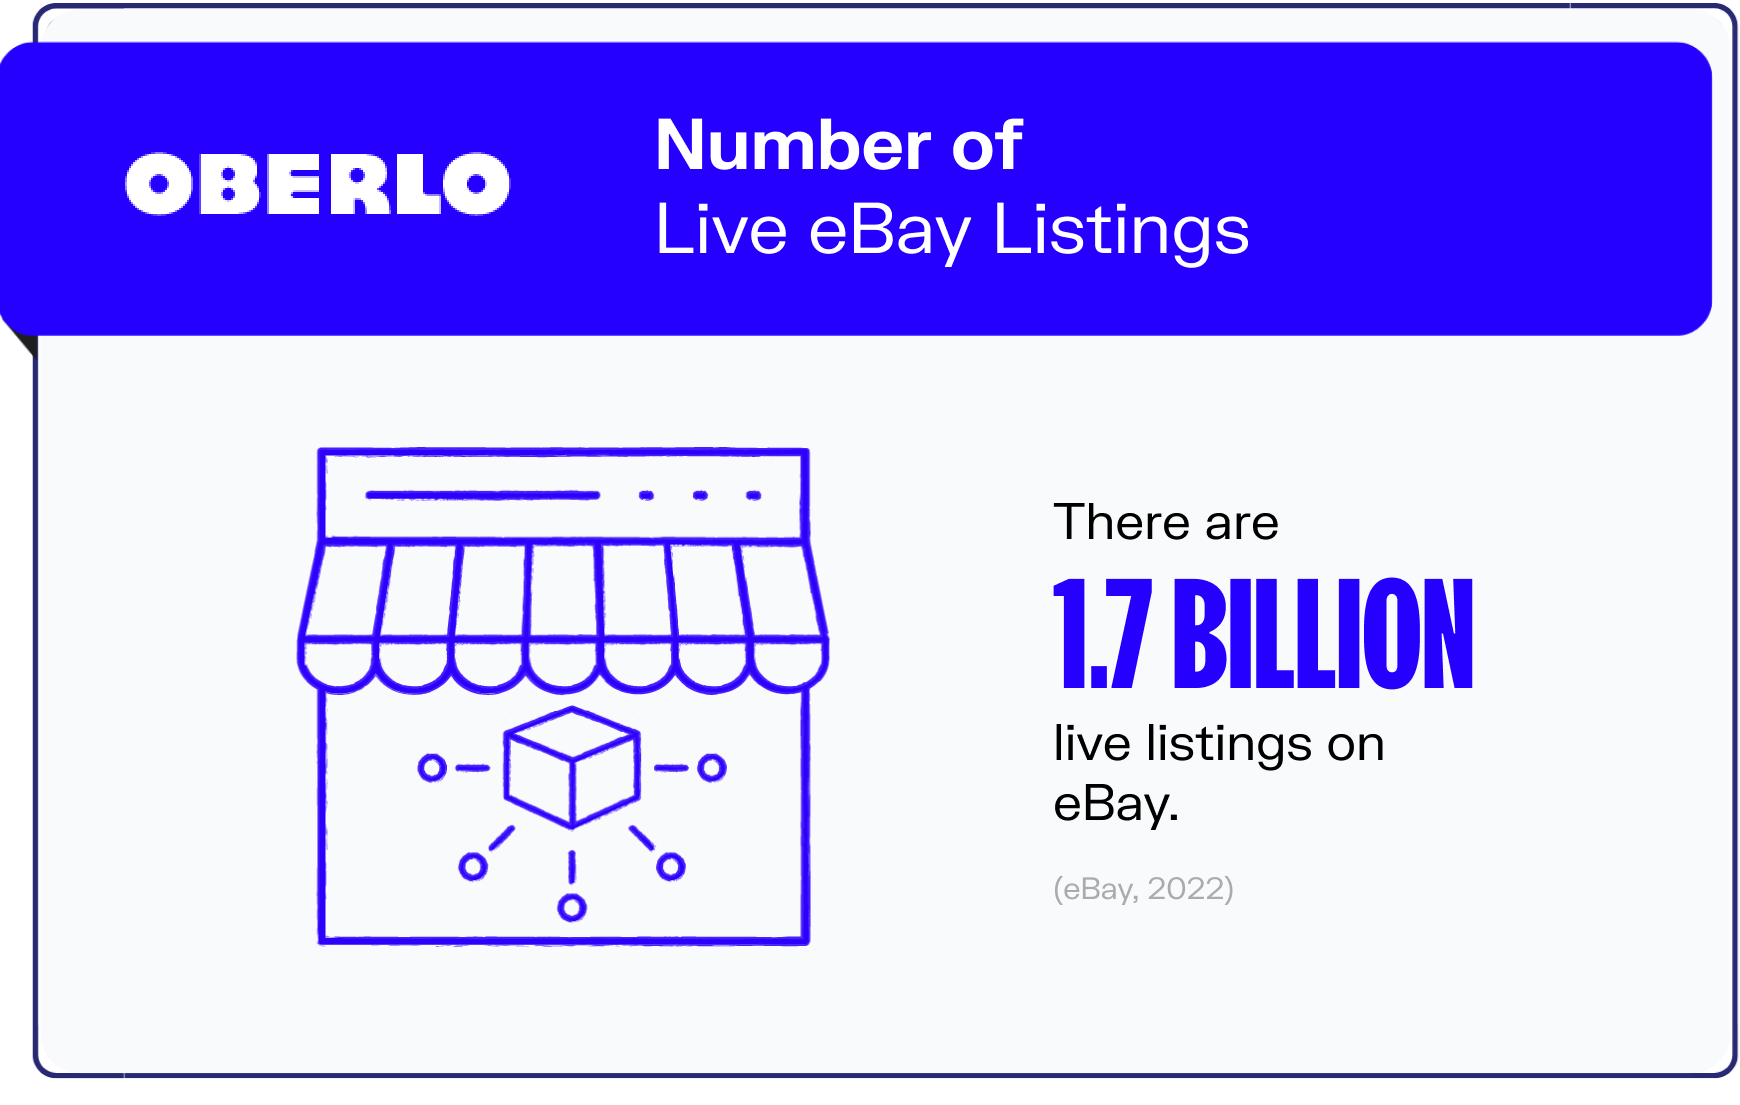 ebay statistics graphic4